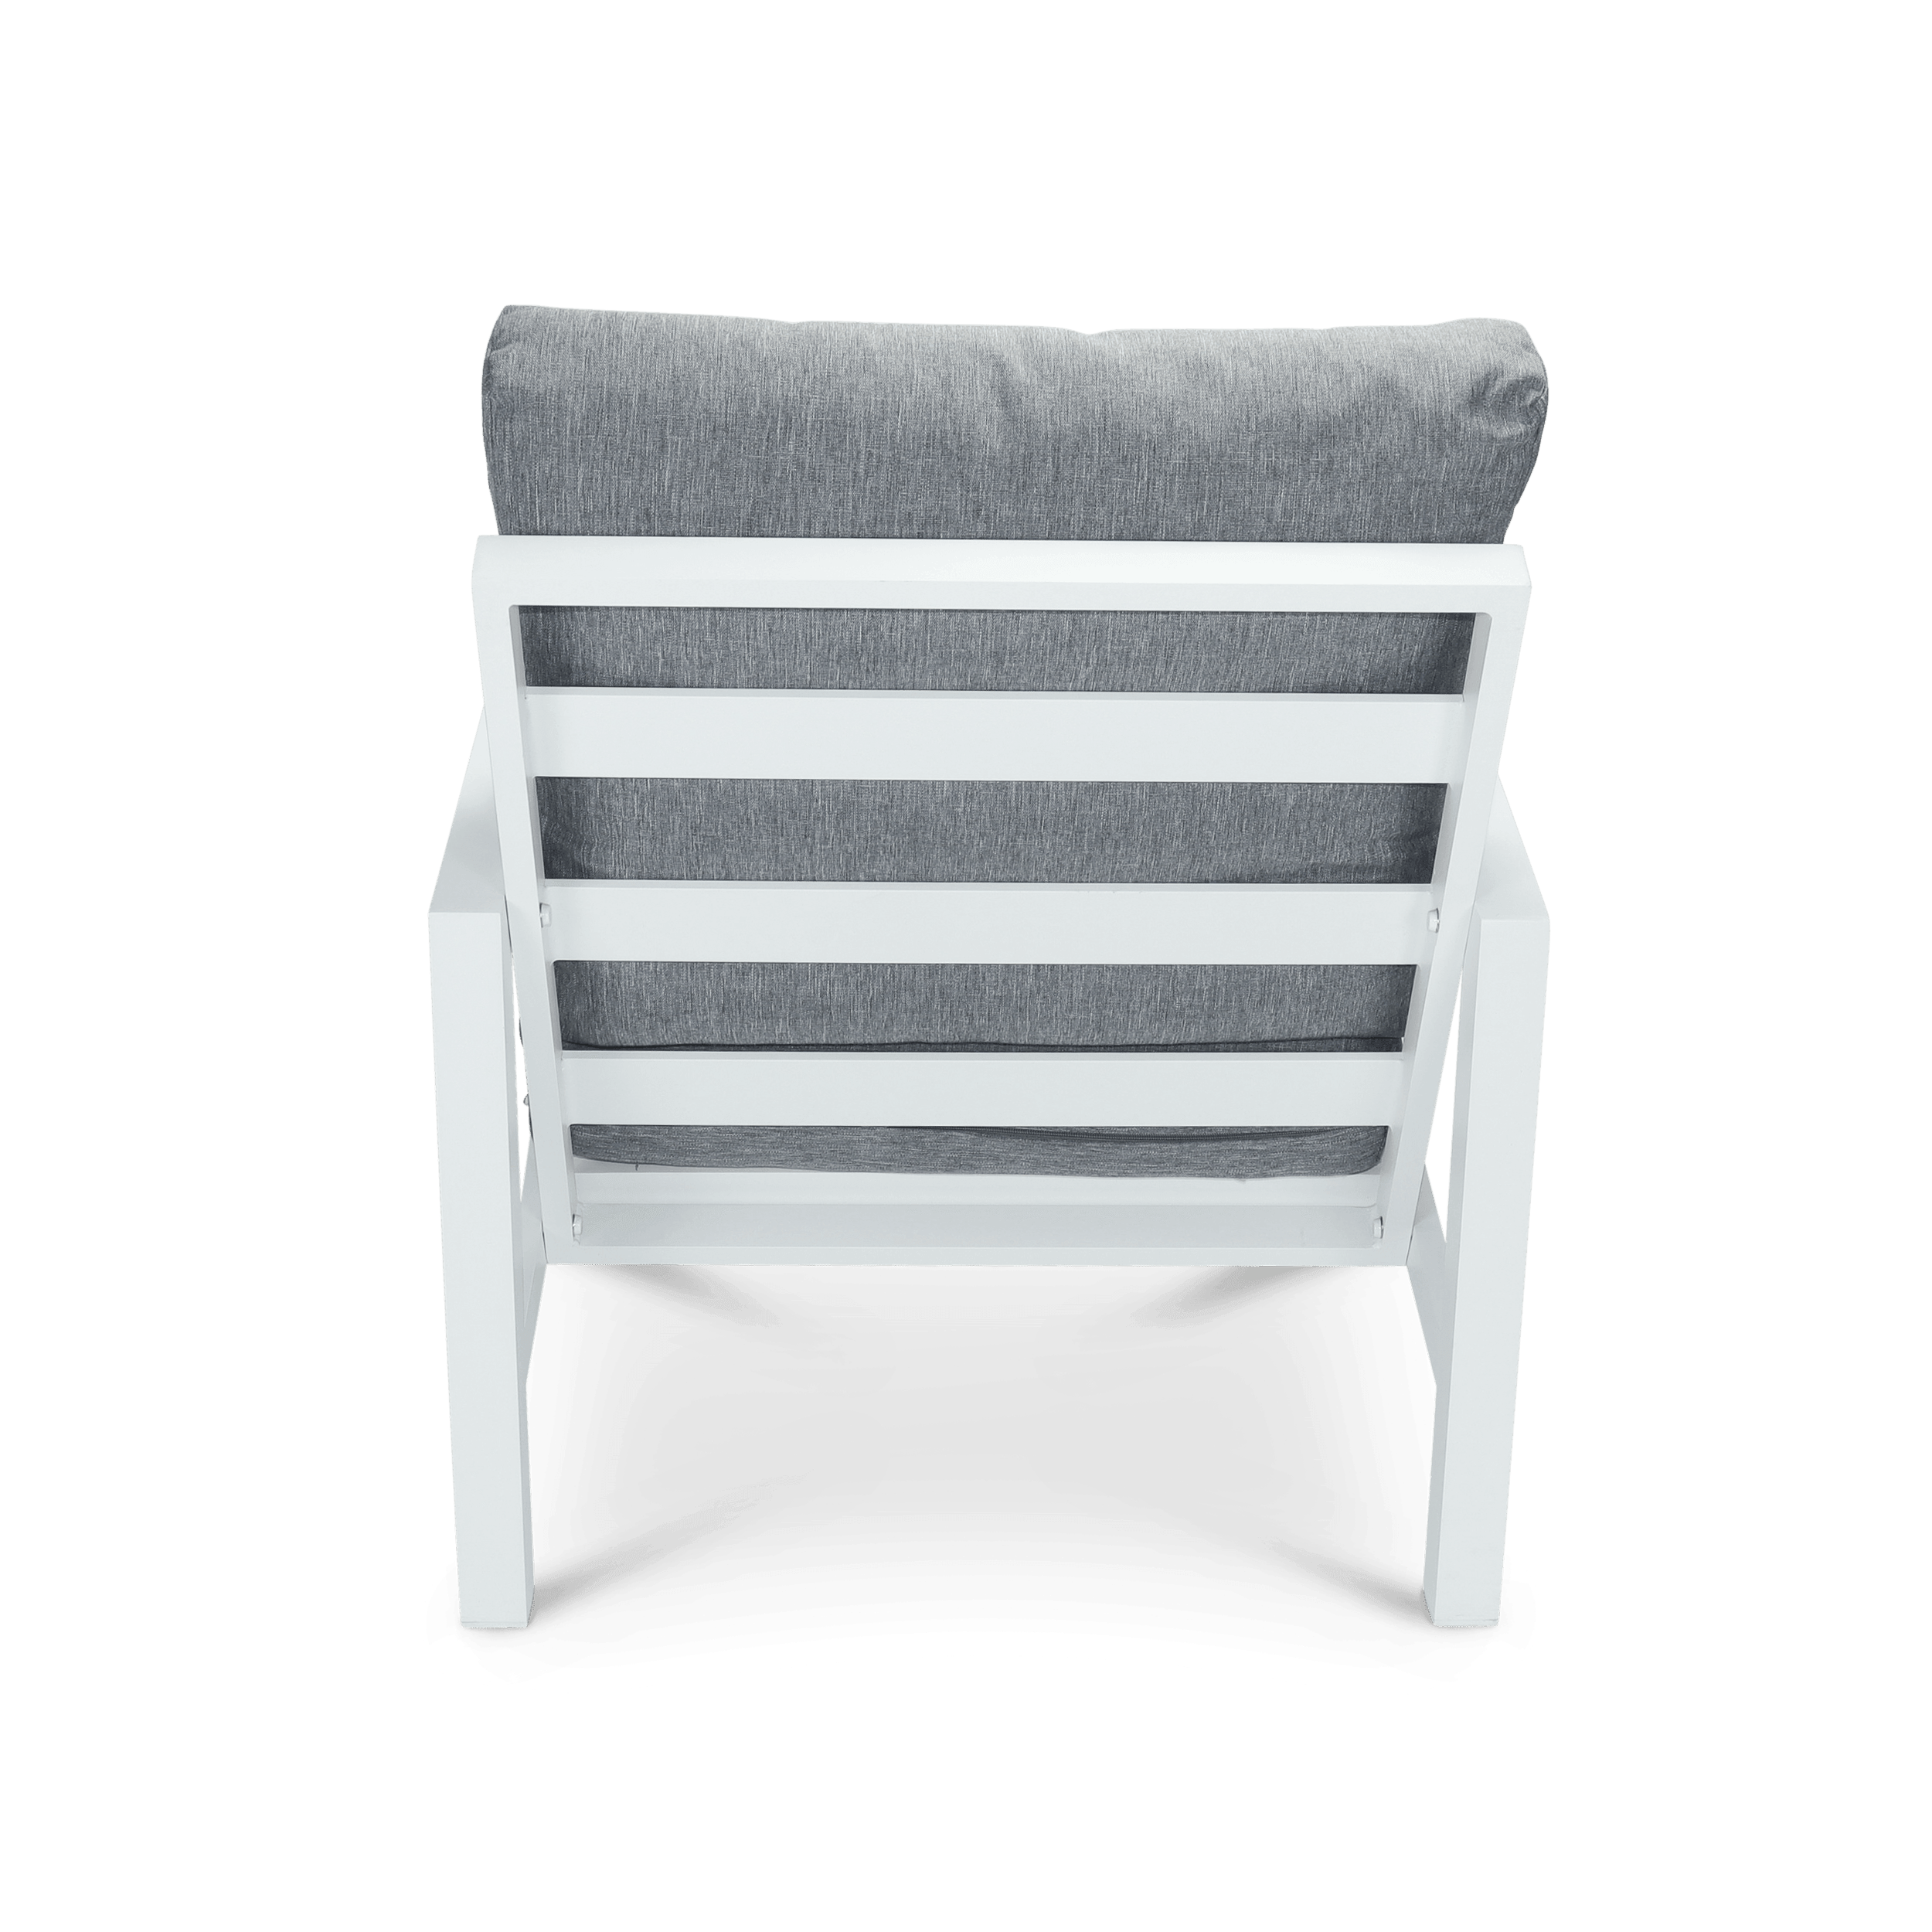 San Sebastian Outdoor Armchair in Arctic White with Platinum Olefin Cushions